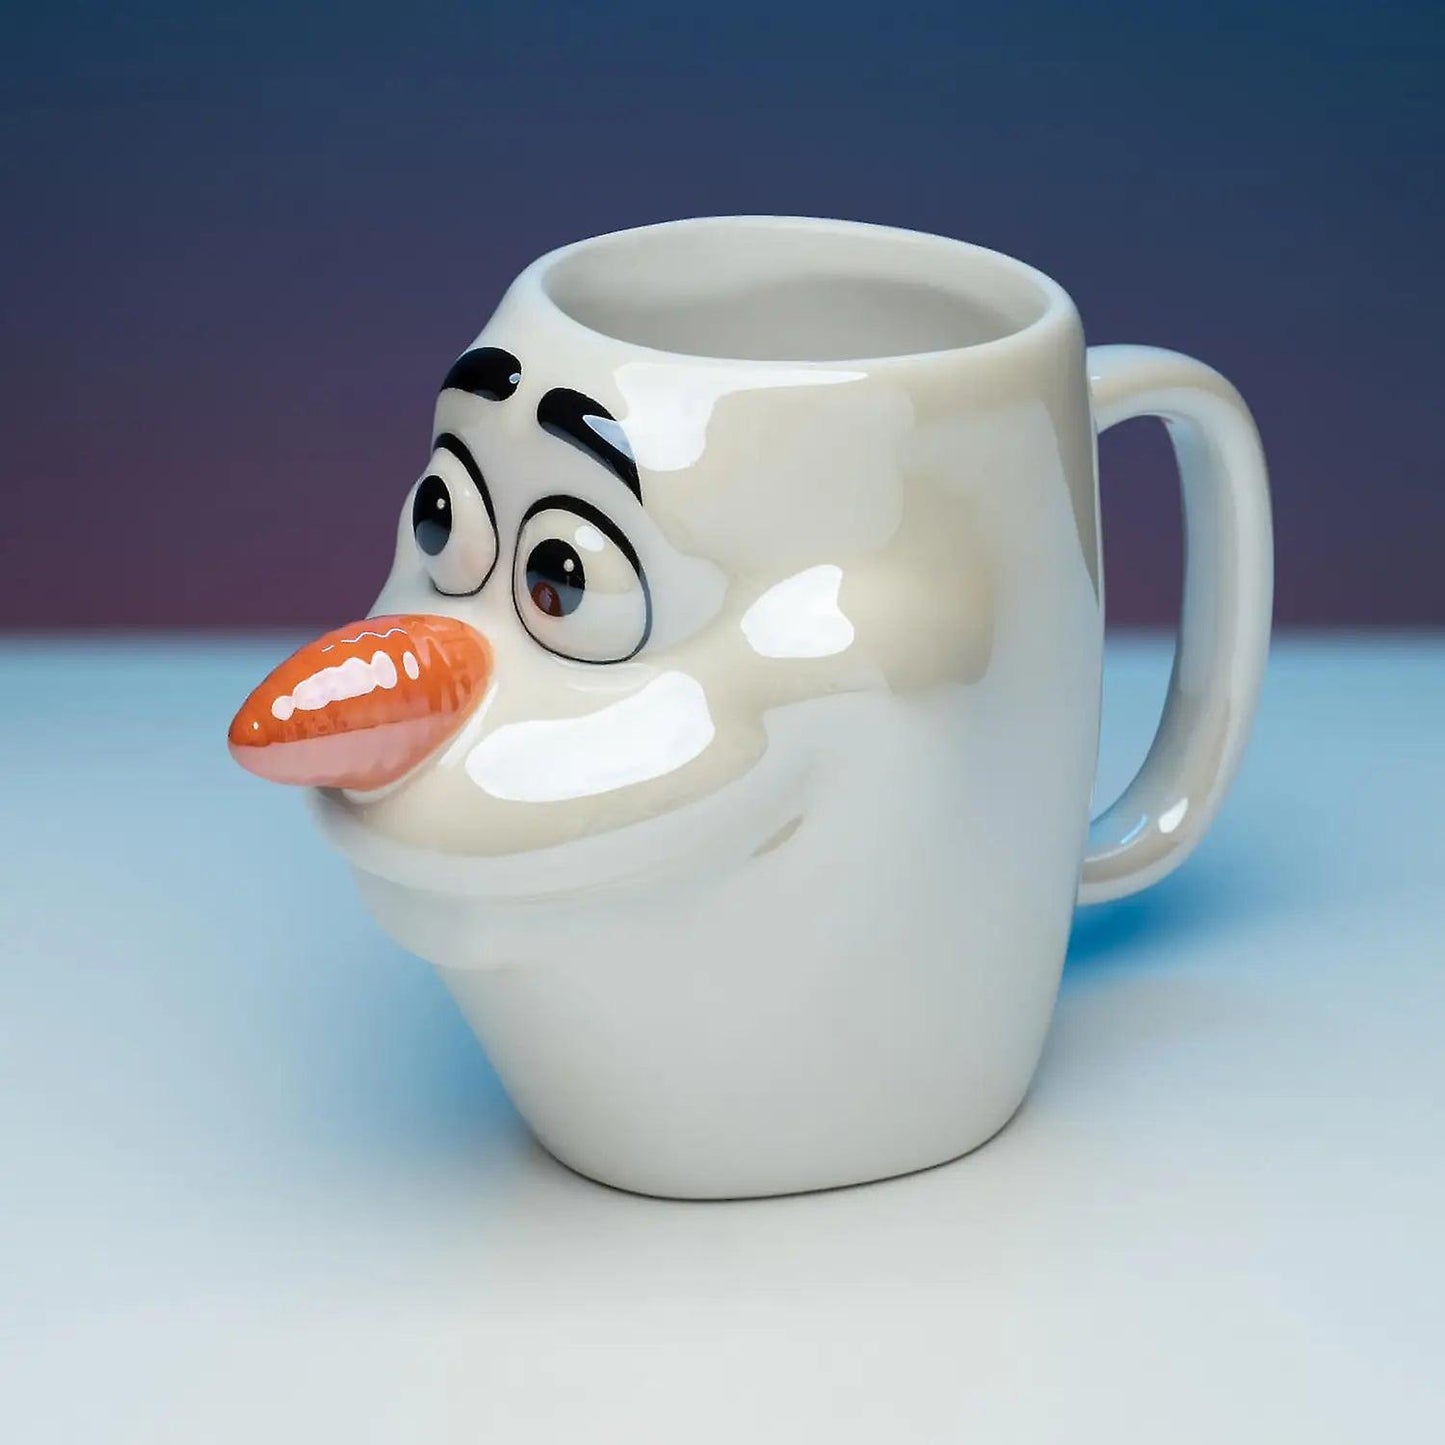 Frozen 2 3D Mug - Olaf 